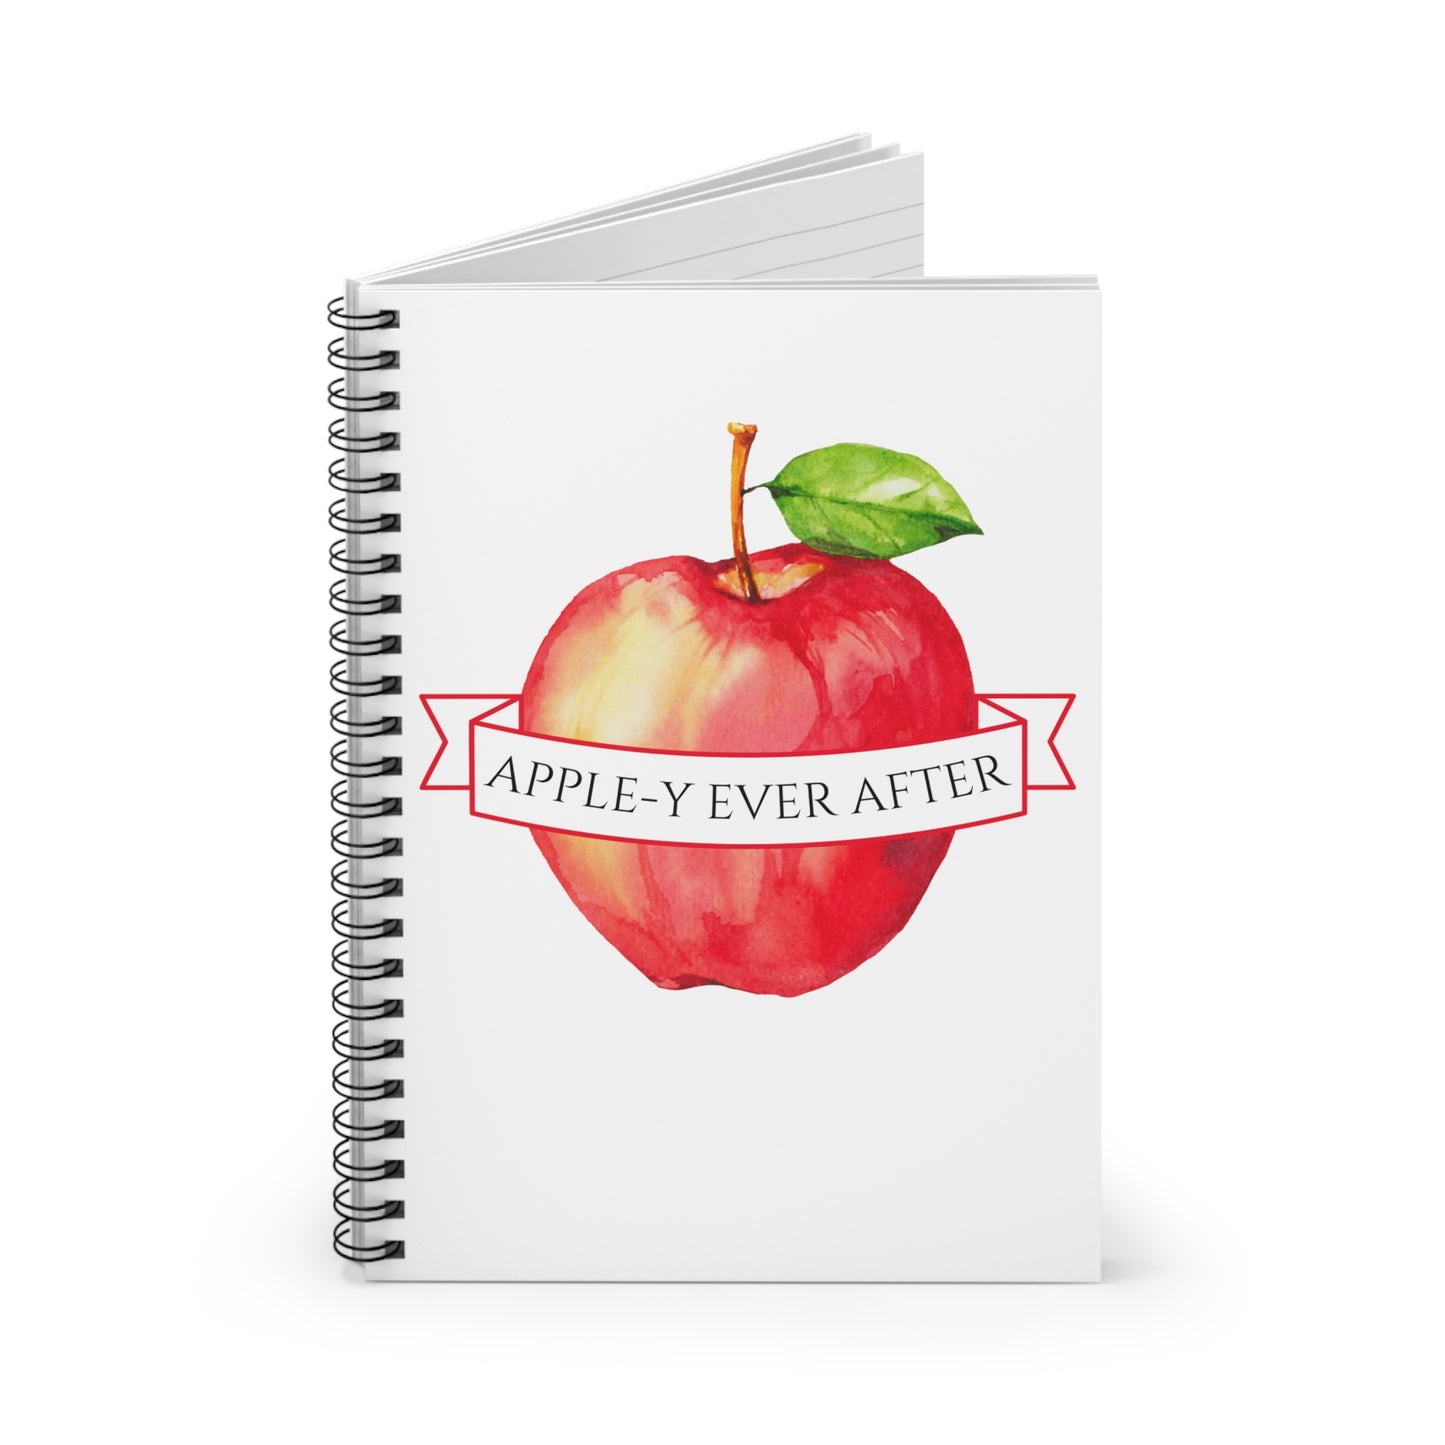 Apple-y Ever After Spiral Notebook - Ruled Line